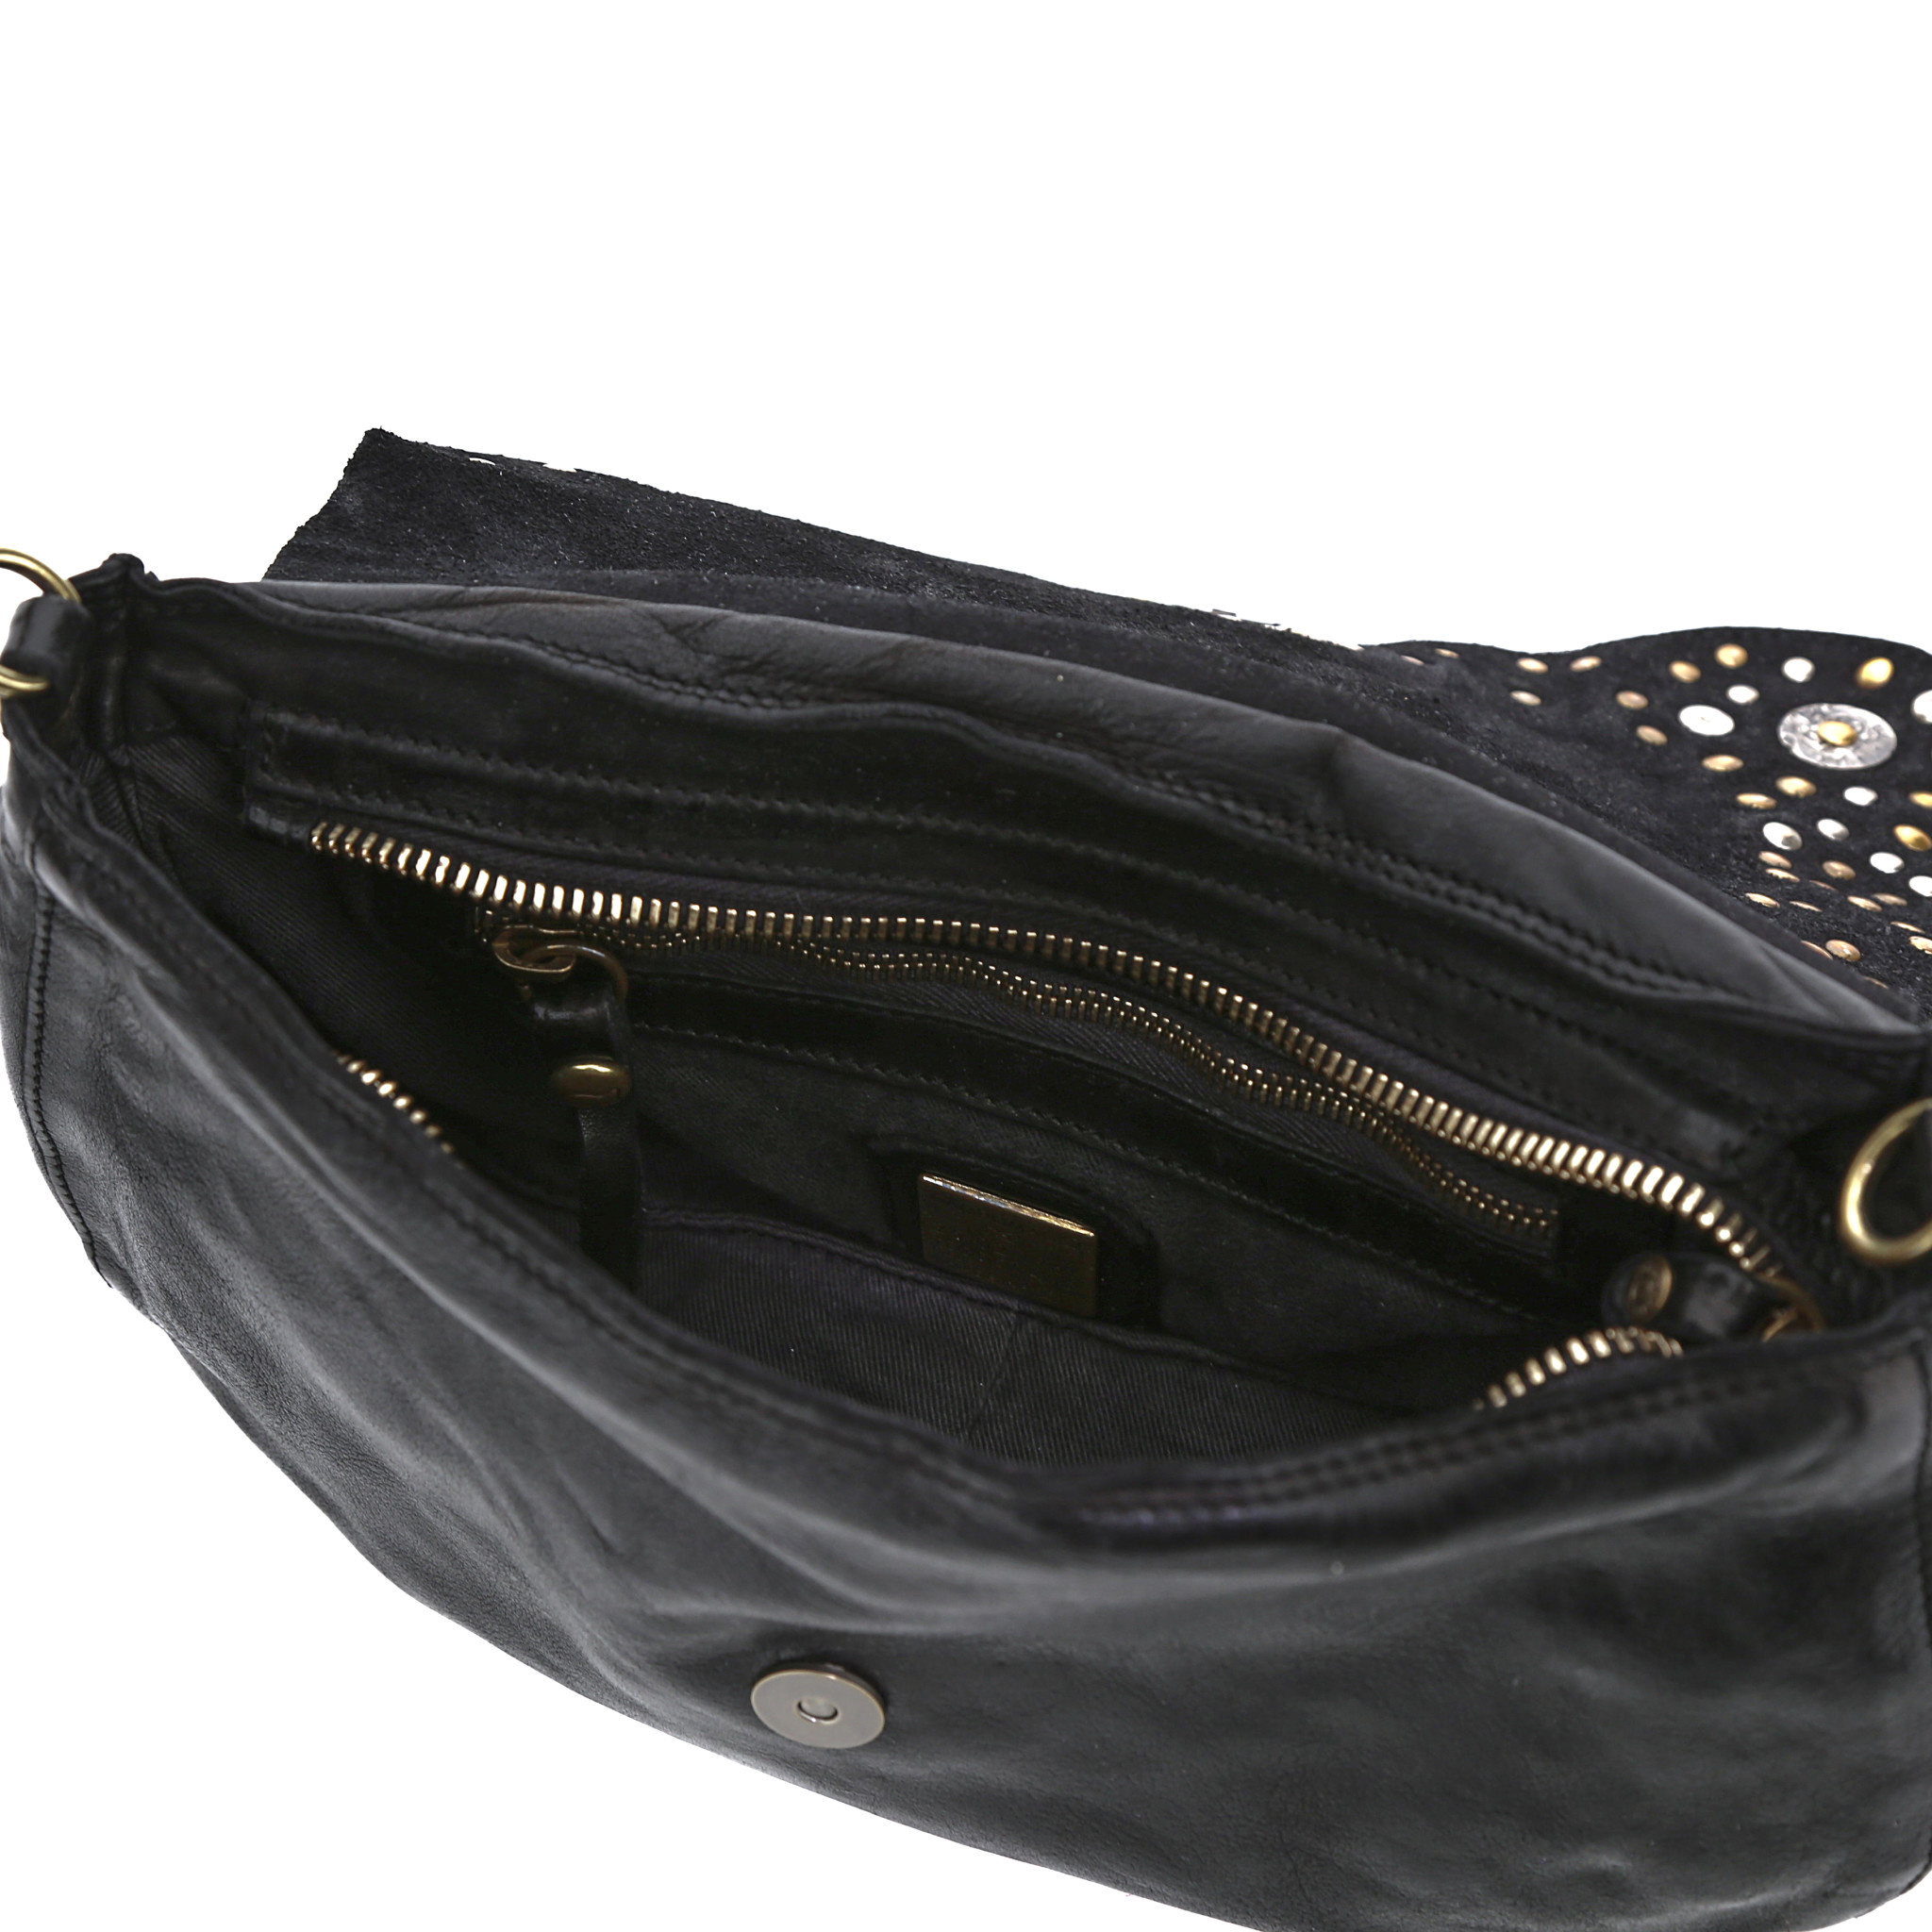 Campomaggi Shoulder bag. Leather w Flap + Bella di Notte Studs. P/D Black.